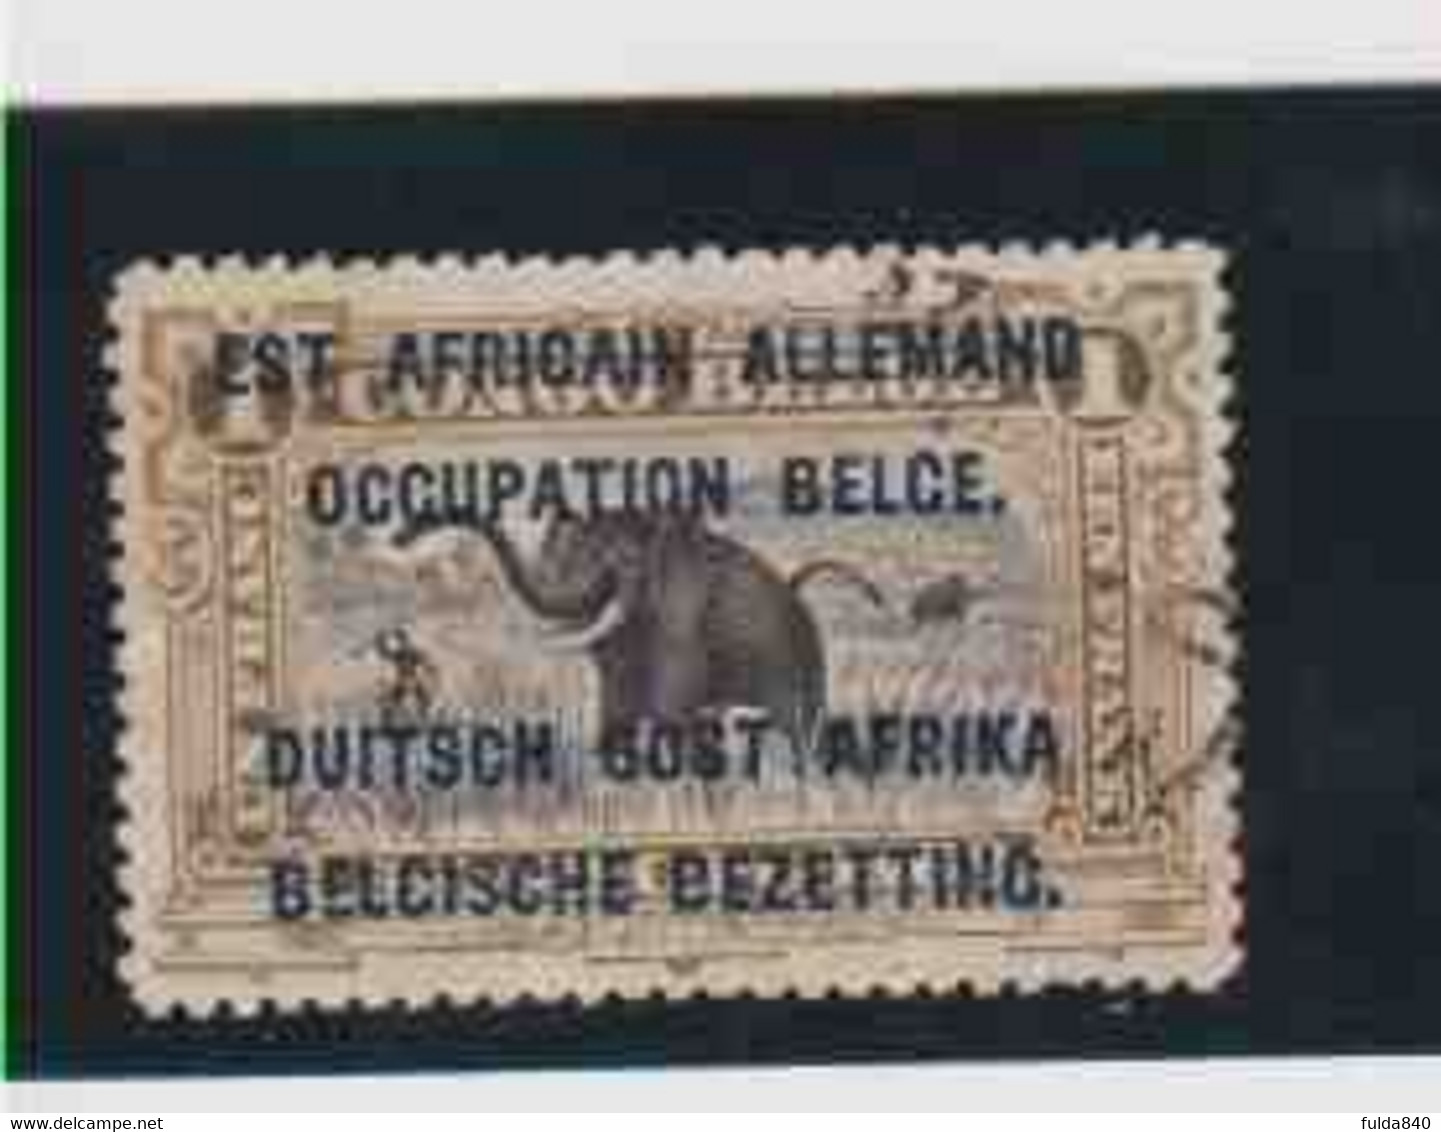 RUANDA-URUNDI. (OBP-COB) 1916 - N°34  *Est Africain Allemand, Occupation Belge*   1F.  Obli  () - Gebraucht